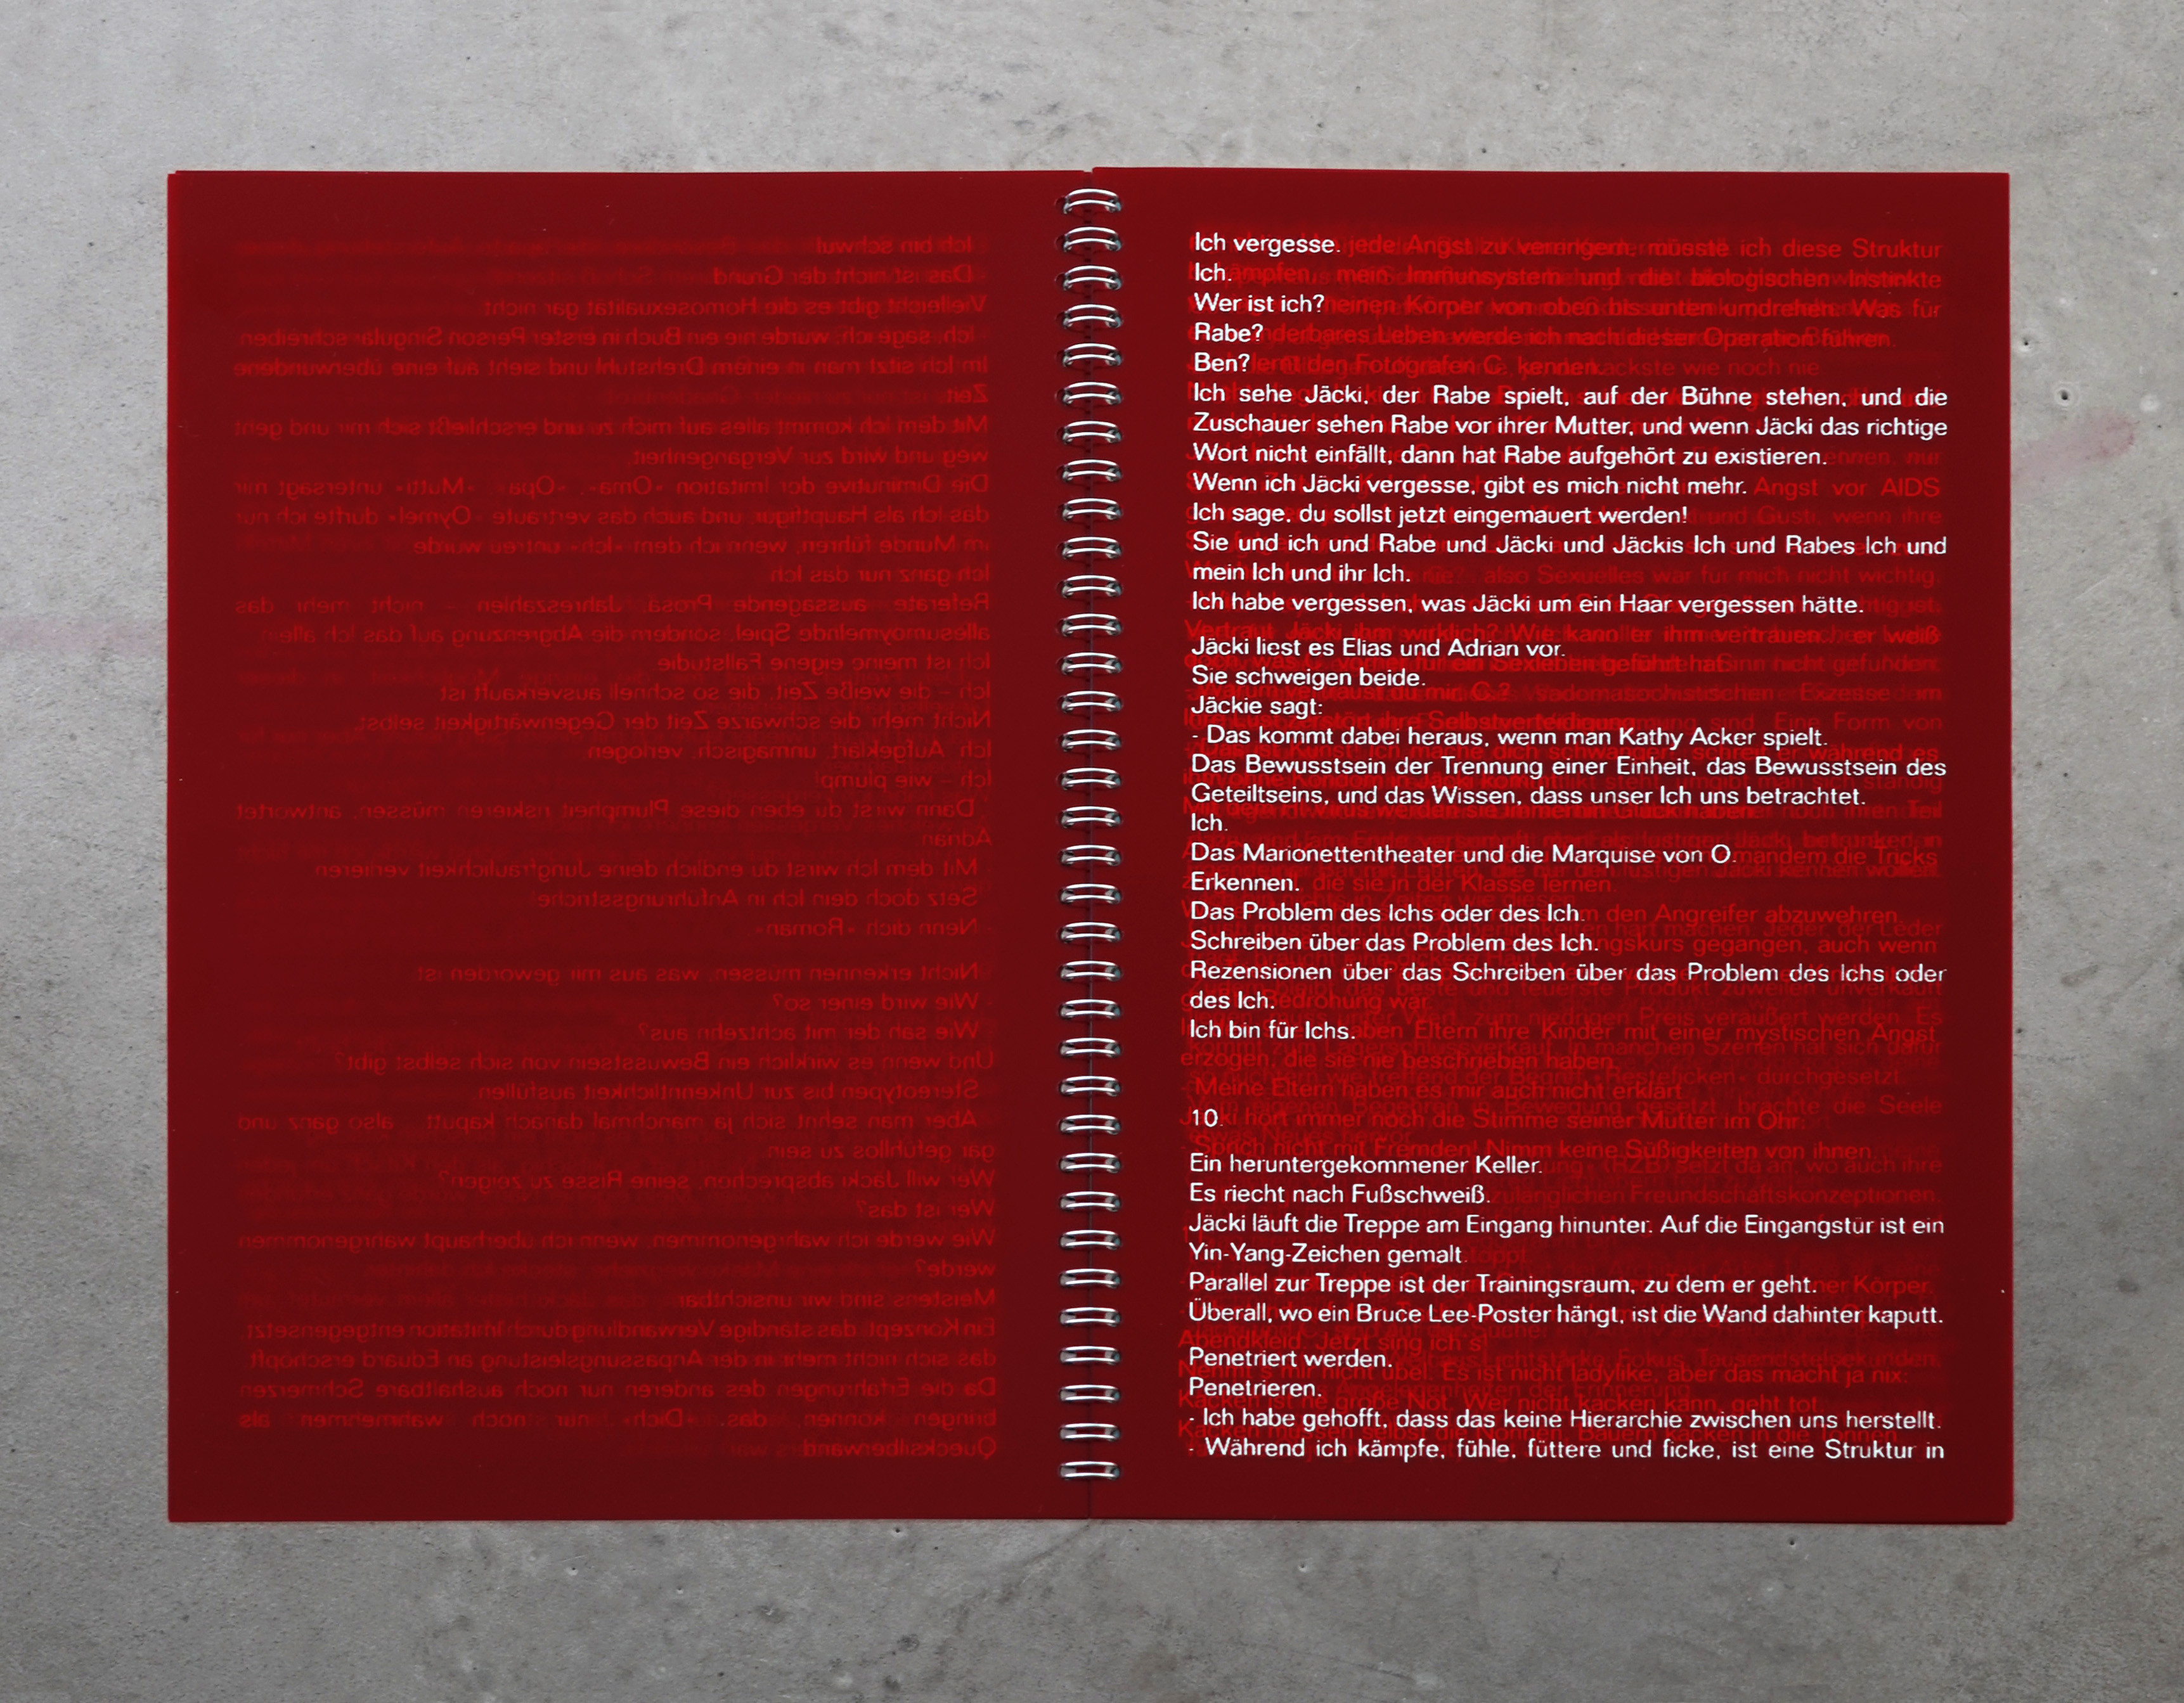 Philipp Gufler. Indirect Contact. 2017. Screen printing on foil. 30,4×19,5 cm. Courtesy BQ, Berlin